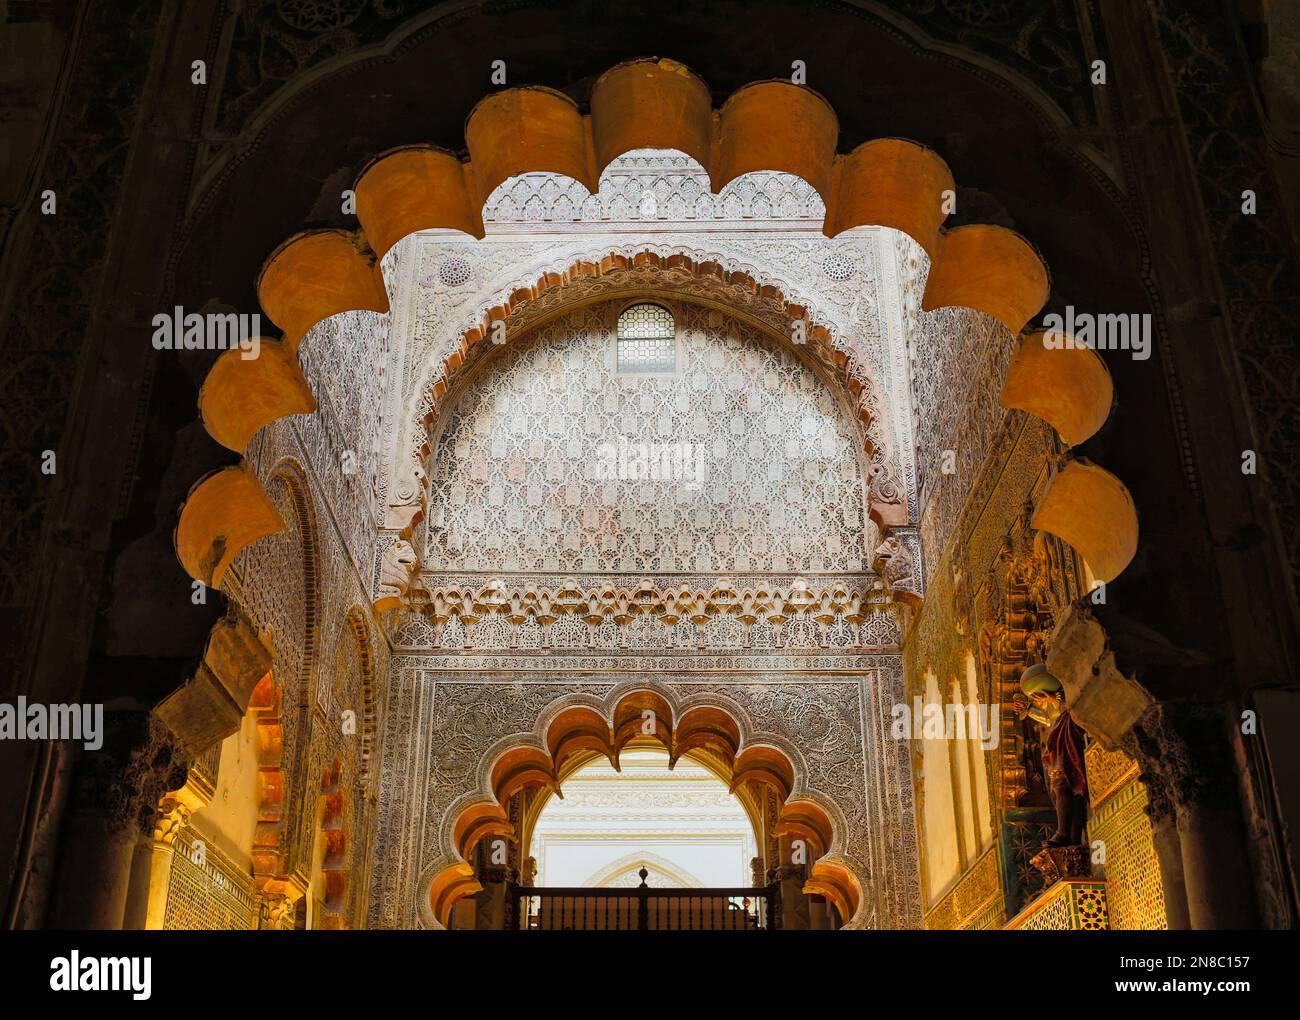 Elementos arquitectónicos moriscos. Interior de la Gran Mezquita de Córdoba o La Mezquita, Córdoba, Provincia de Córdoba, Andalucía, sur de España. El hi Foto de stock